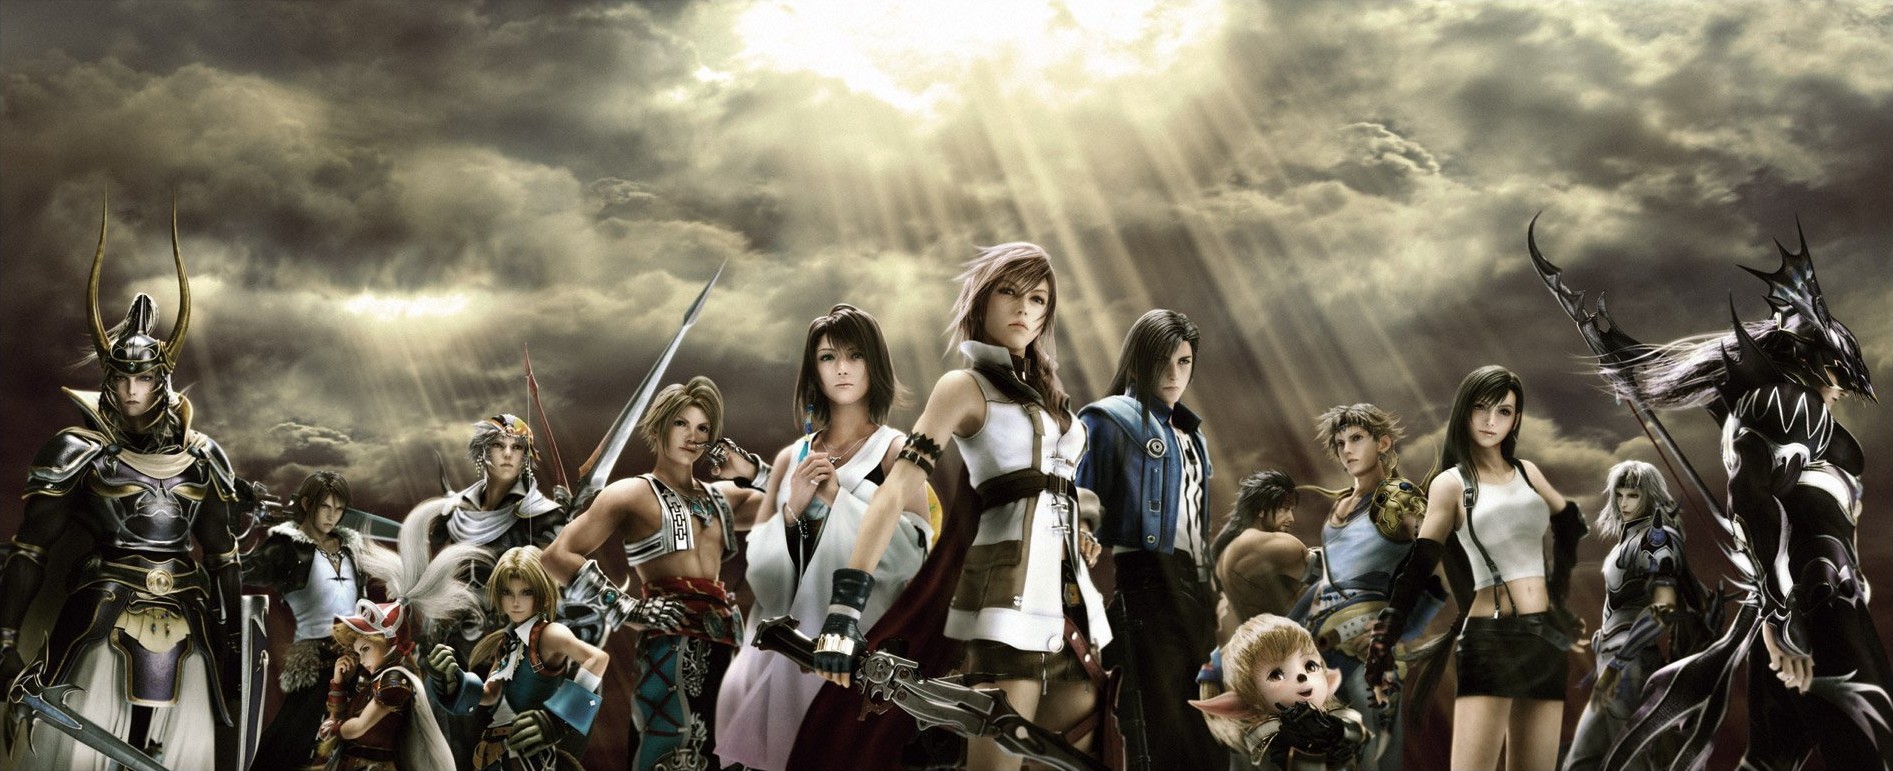 New “Dissidia Final Fantasy” Announced - 3-on-3 Battles Galore